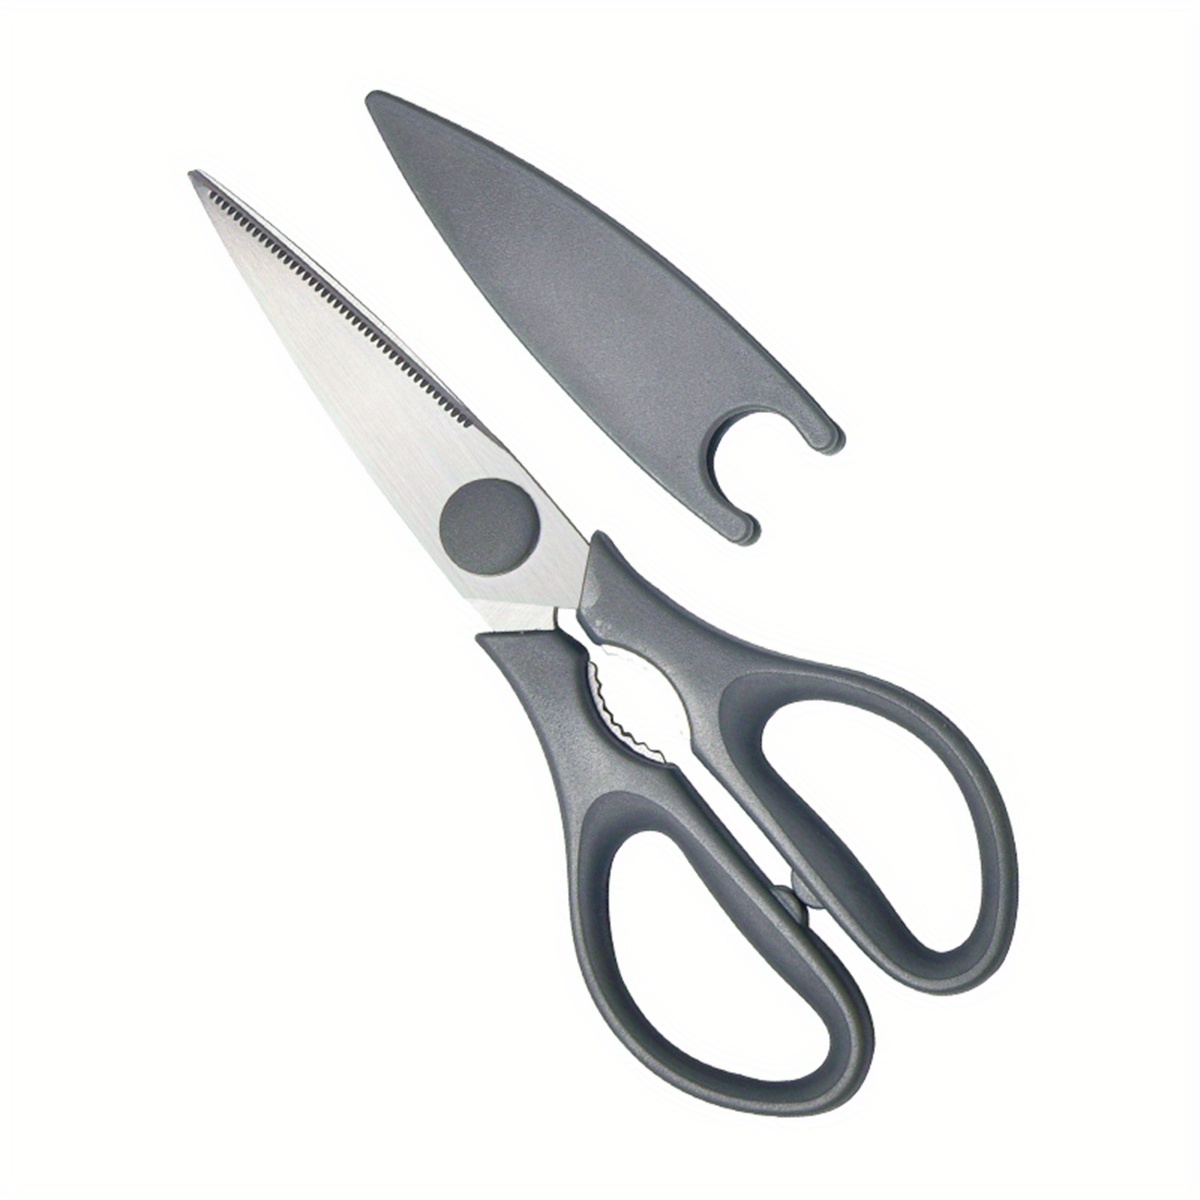  TECHEF Kitchen Shears, All Purpose Scissors, Dishwasher Safe,  Heavy Duty Meat Scissors Poultry Shears, Stainless Steel, Made in Korea  (Dark Gray) : Home & Kitchen